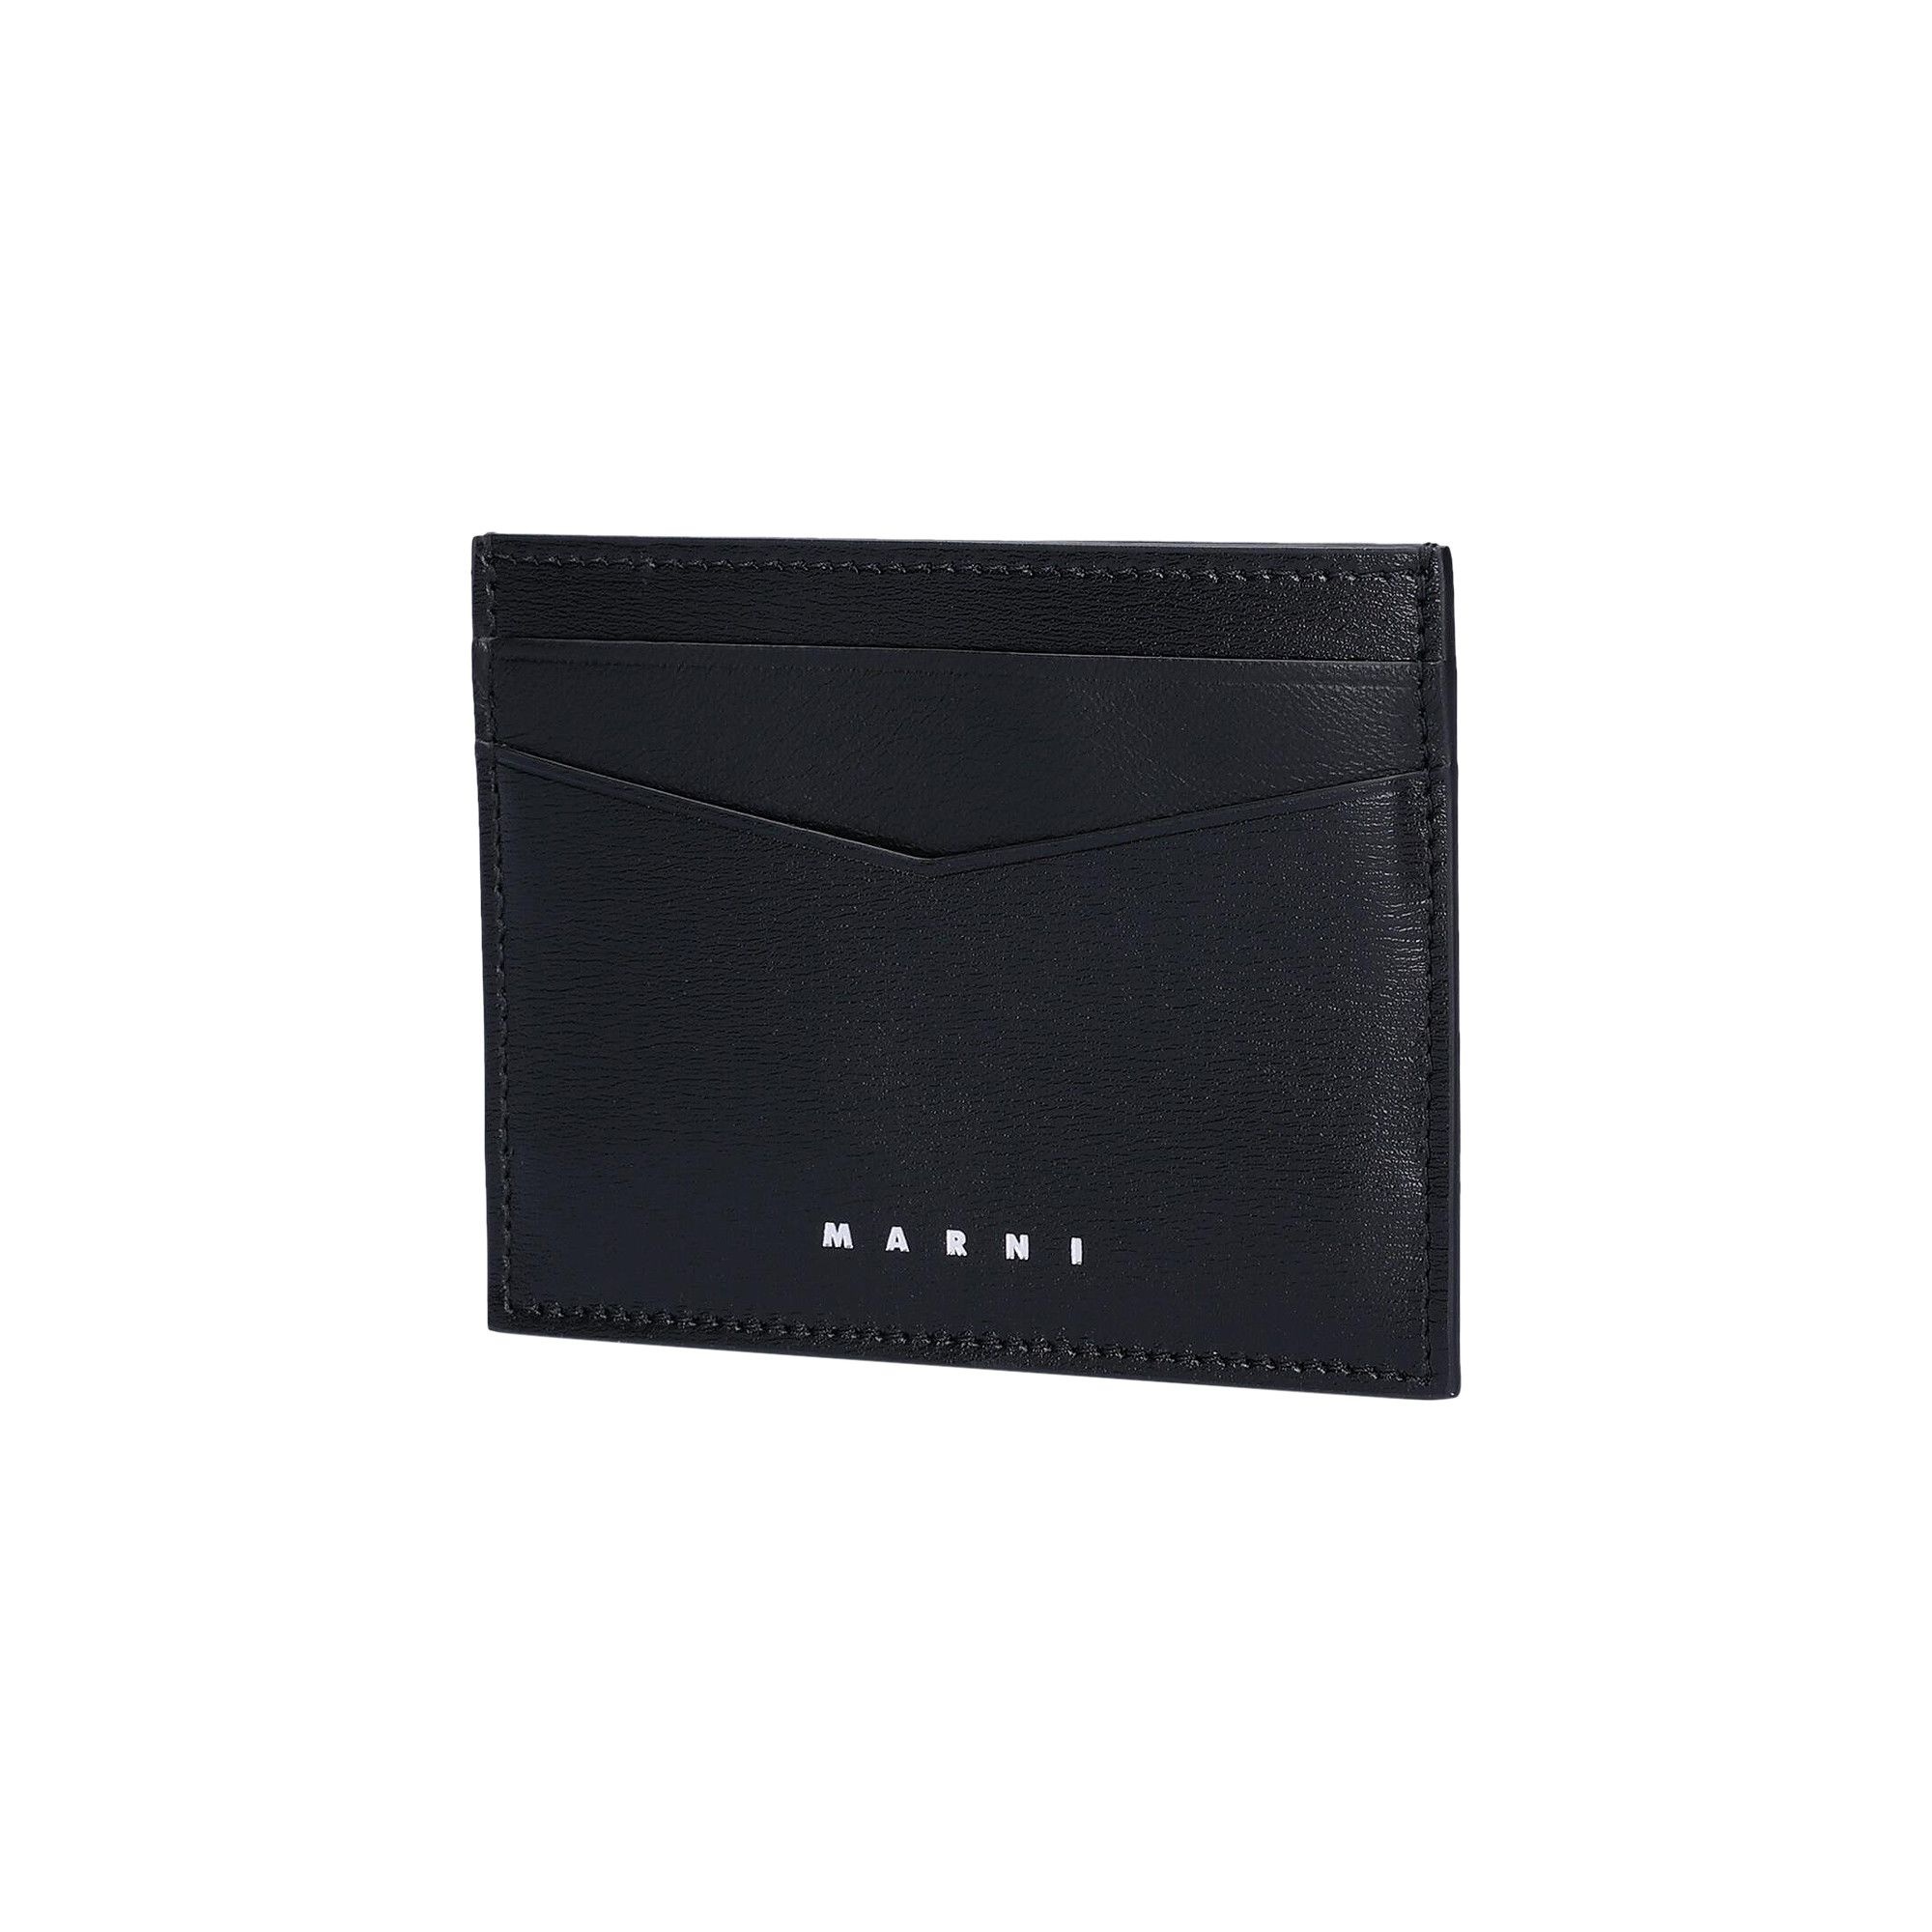 Marni Wallet 'Black' - 3